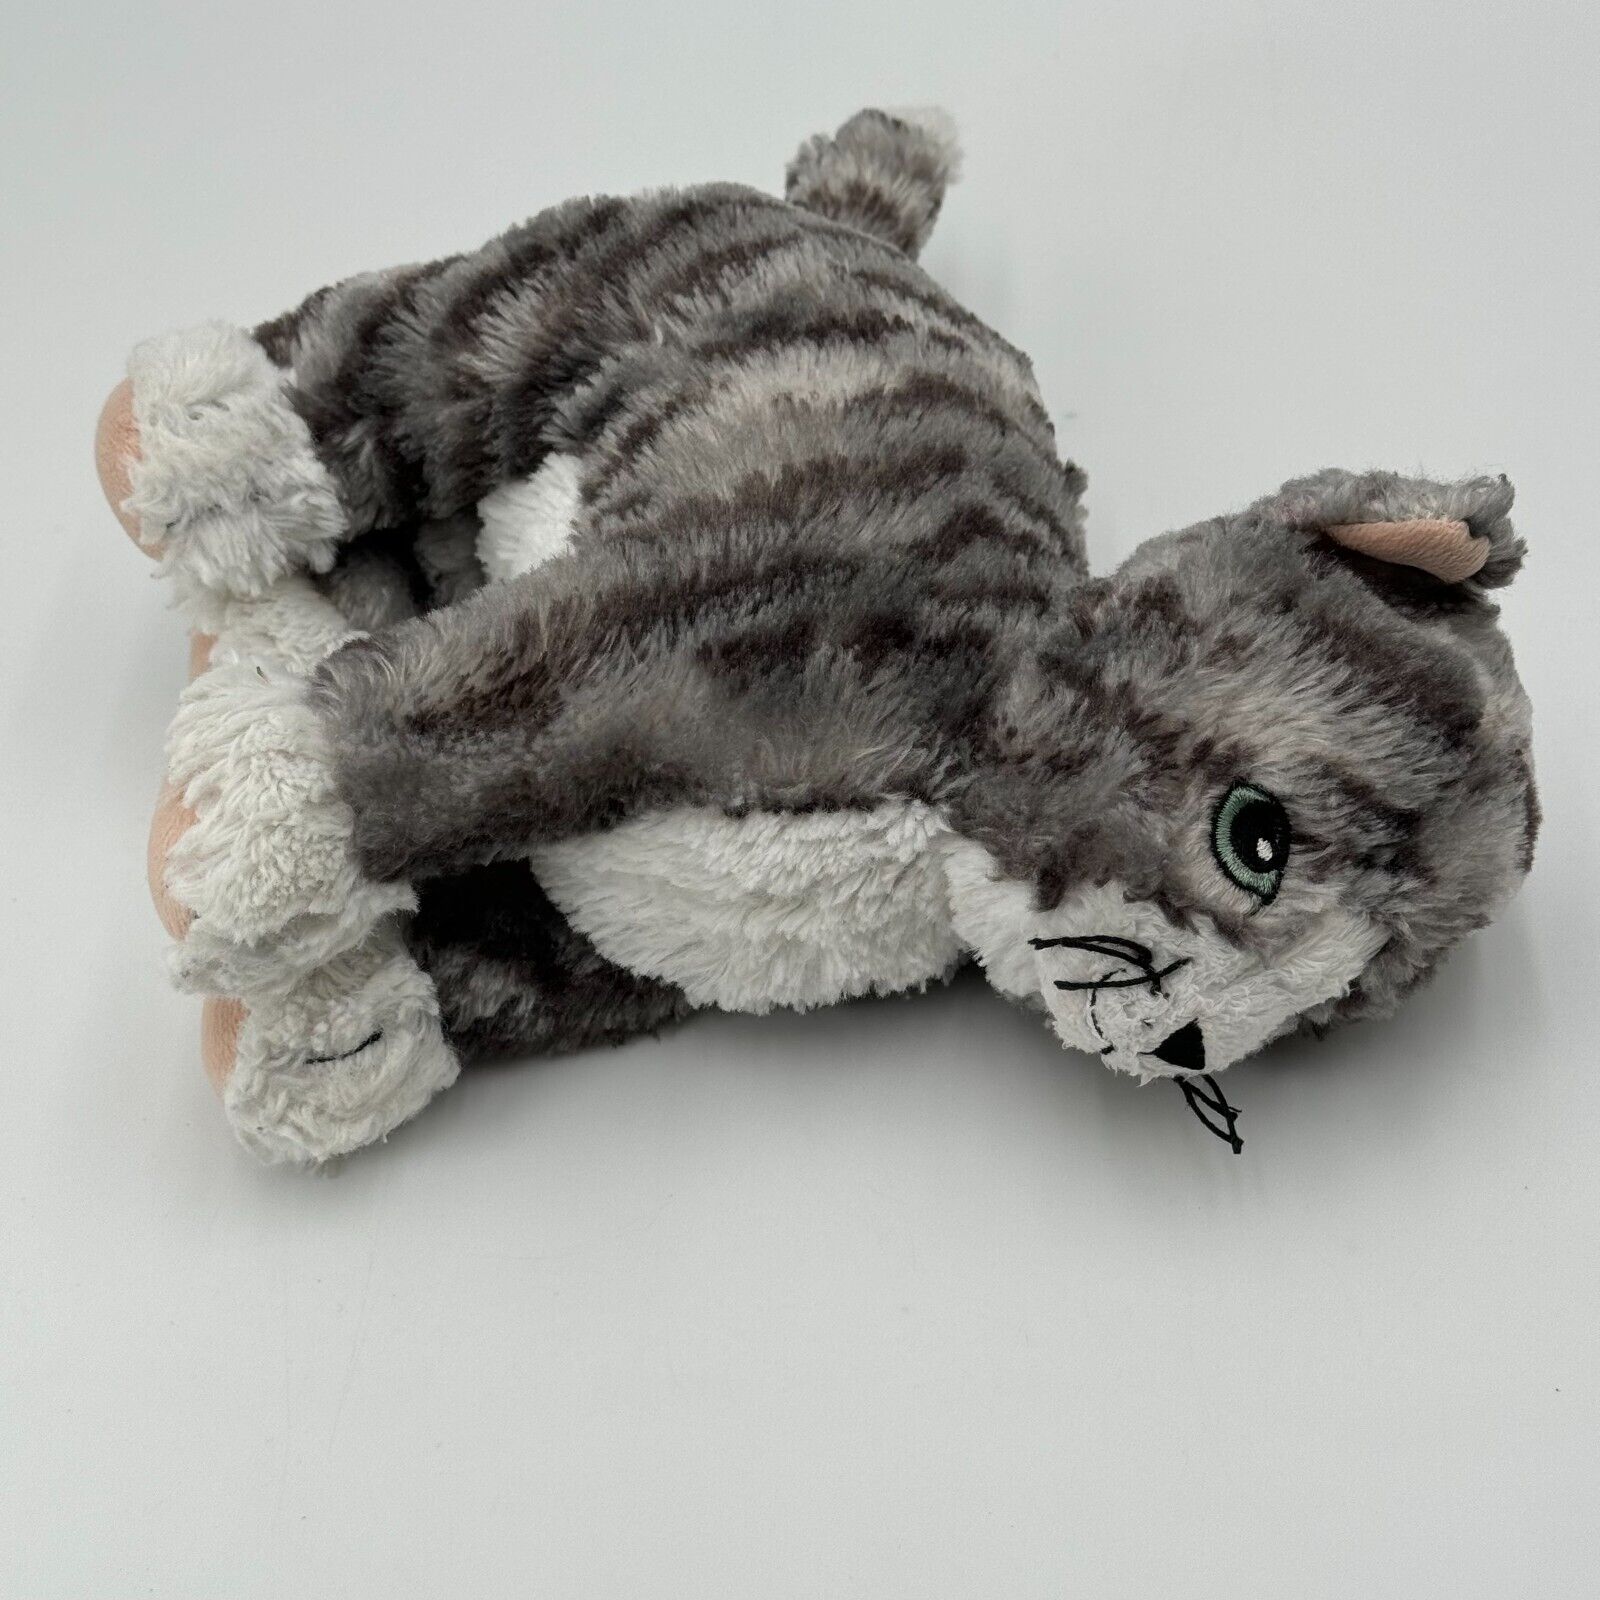 IKEA Lilleplutt Kitty Cat 8" Plush Stuffed Animal Gray Black White Tabby